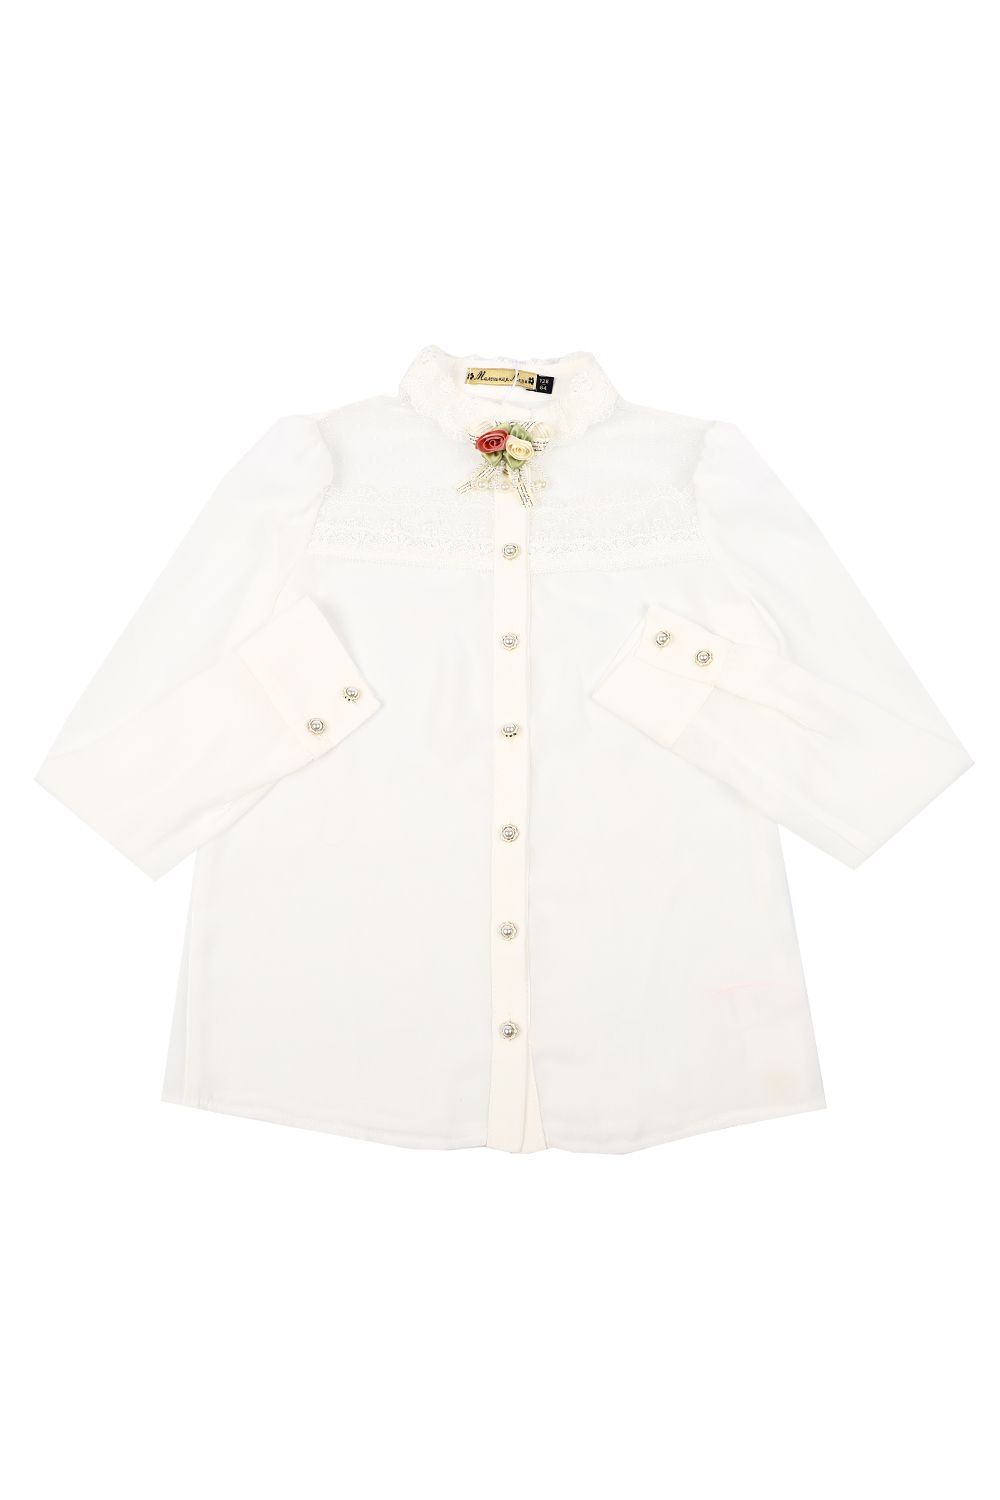 Блуза Маленькая Леди, размер 128, цвет белый 2017-519-ВПШС - фото 1